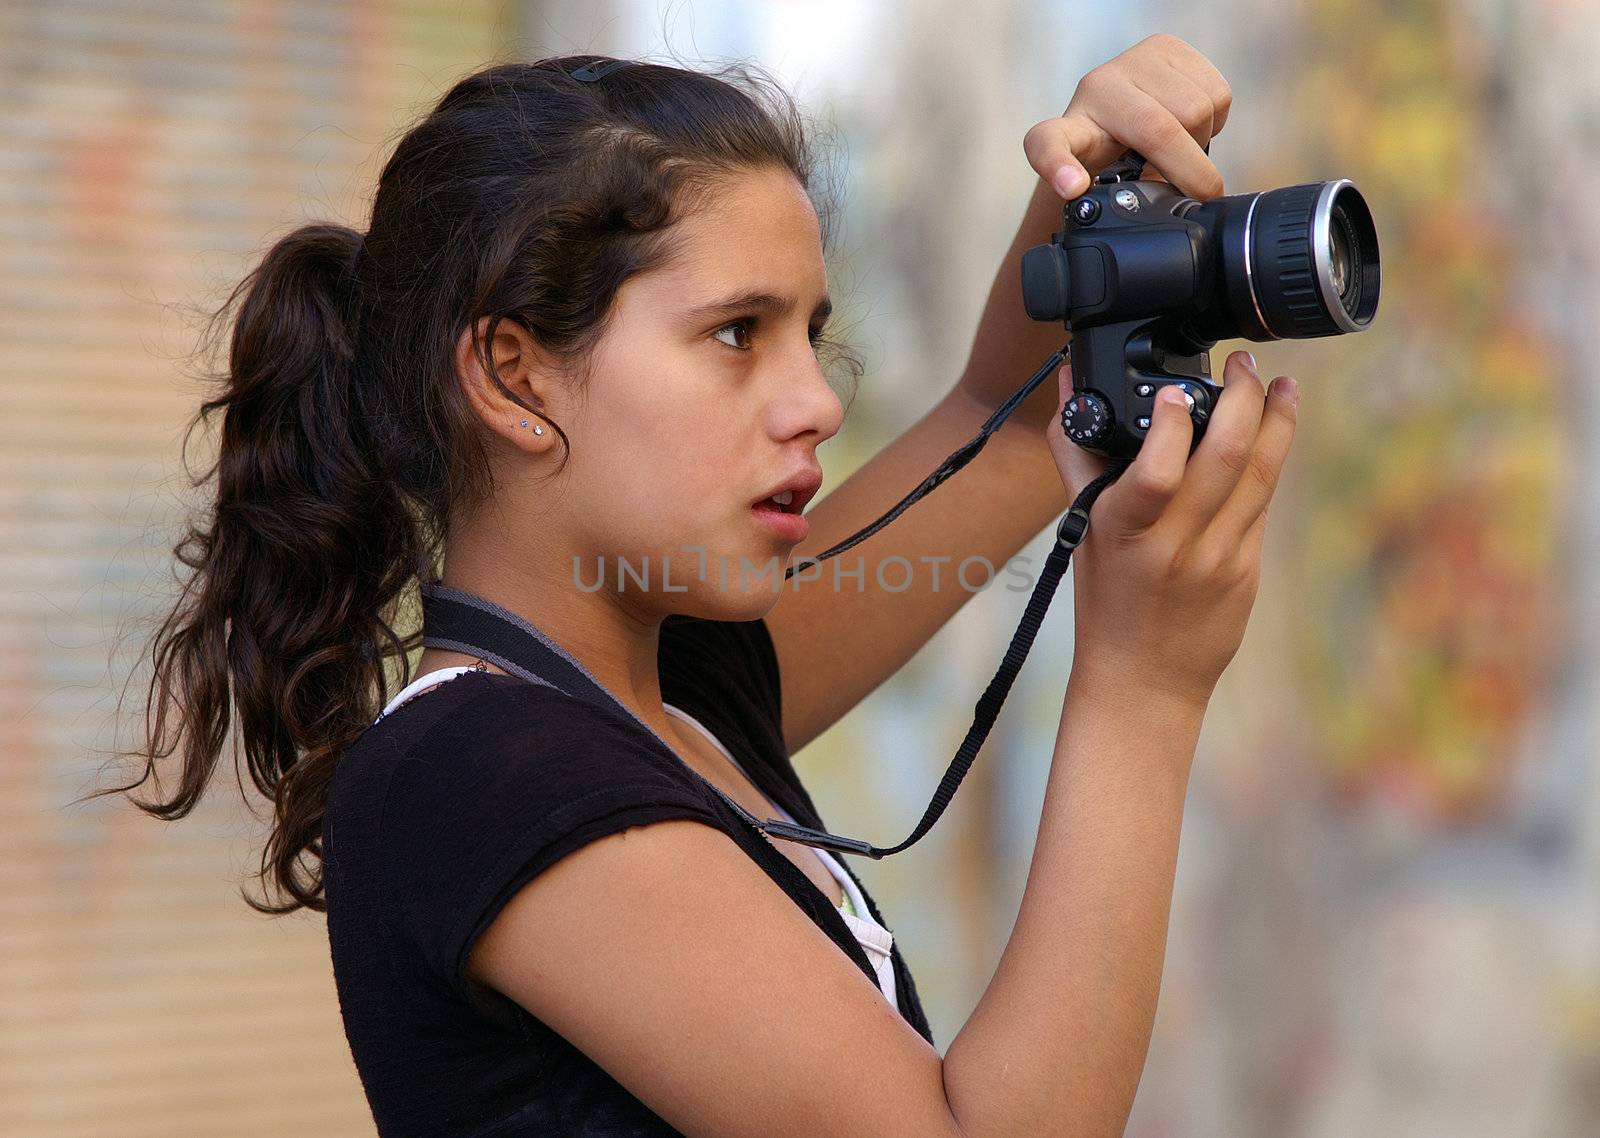 teenager with didital camera by Maya